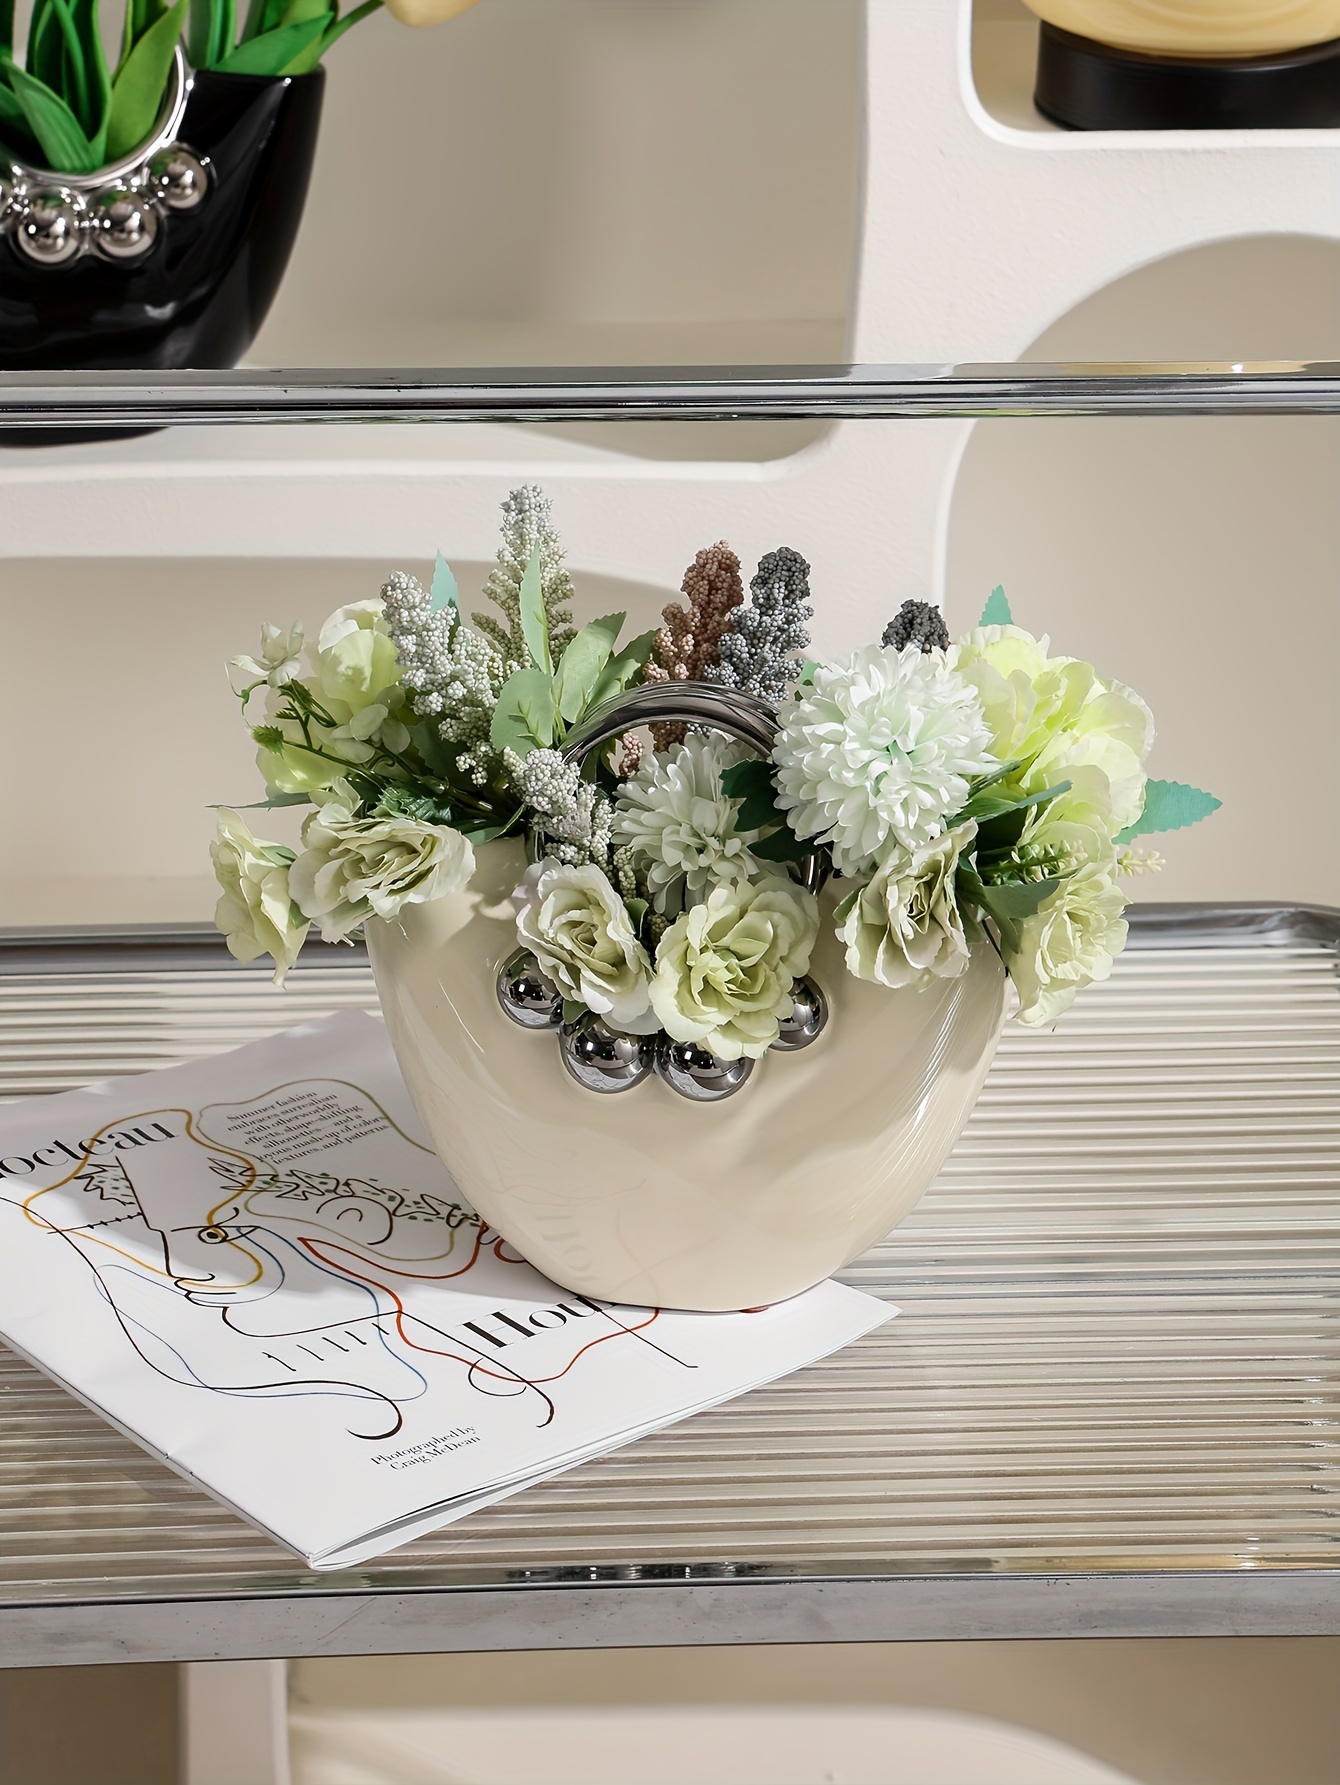 1pc Ceramic Handbag Vase For Modern Home Decor Bag Flower Vase With Handle Purse  Vase Black Or White Bag Vase Fun Vases For Aesthetic Wedding Room Office  Table Accent Gift - Patio